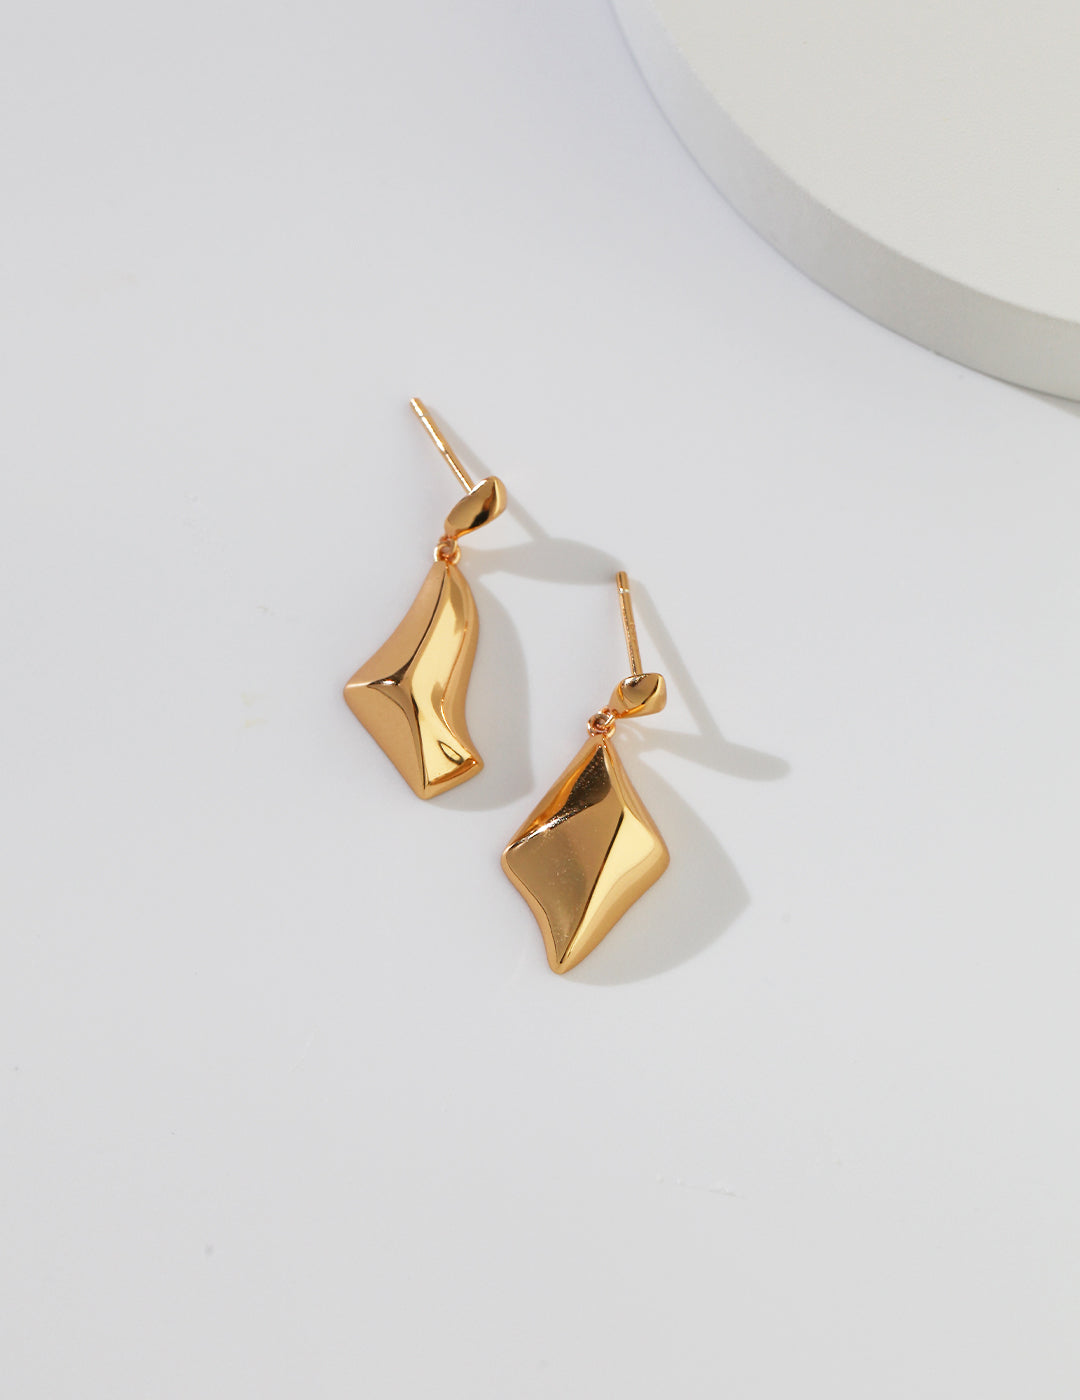 Irregular pyramid earrings, gold & silver